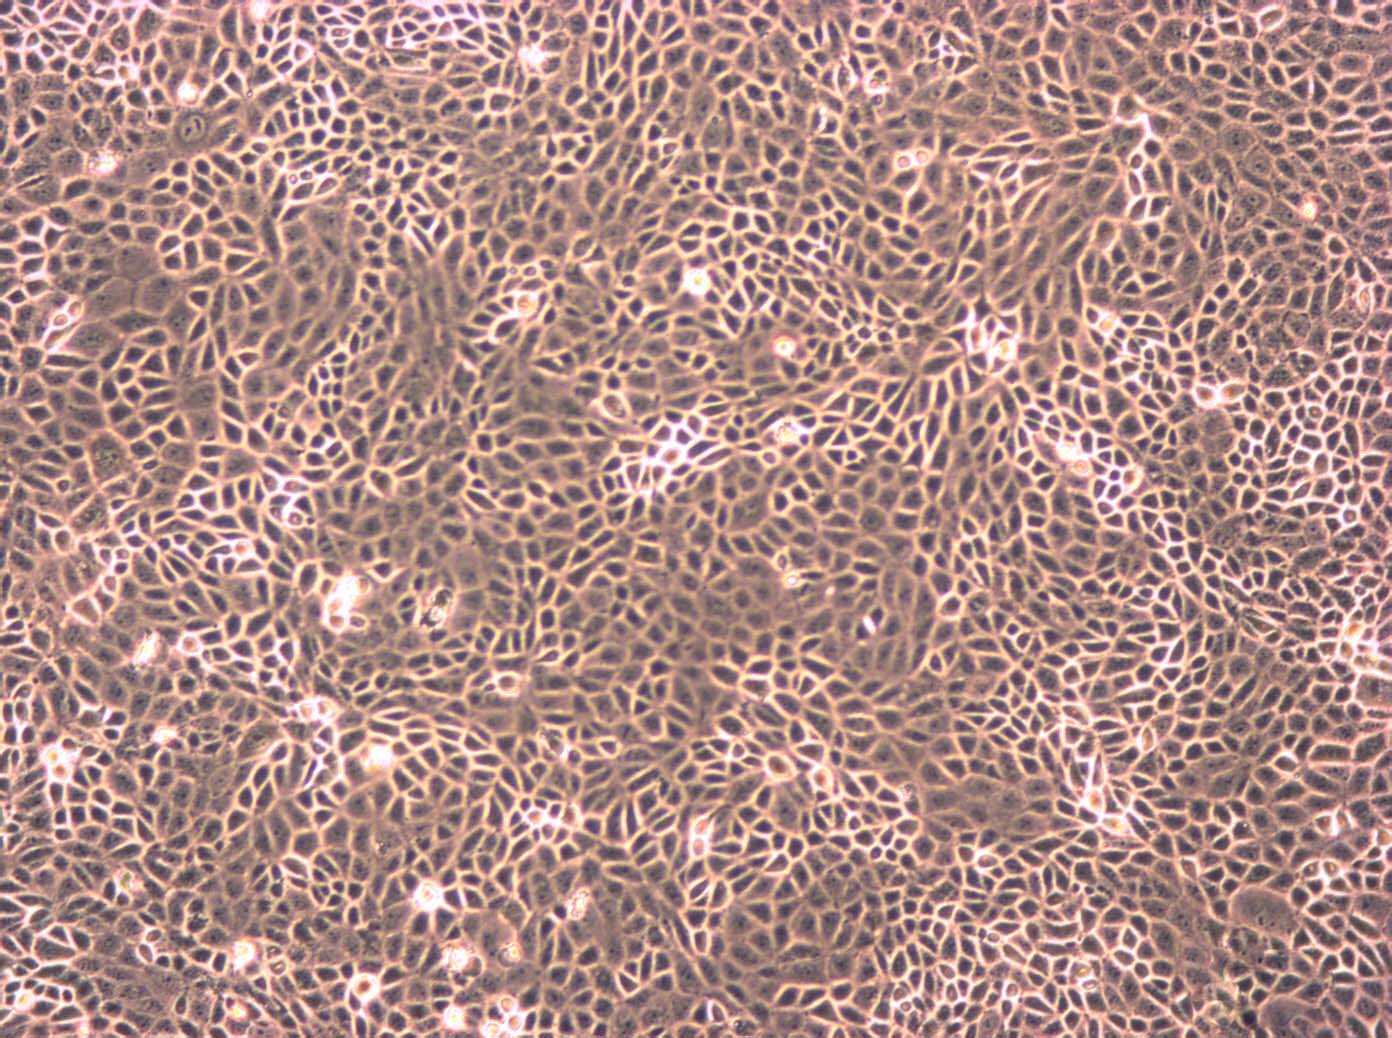 3LL epithelioid cells小鼠肺癌细胞系